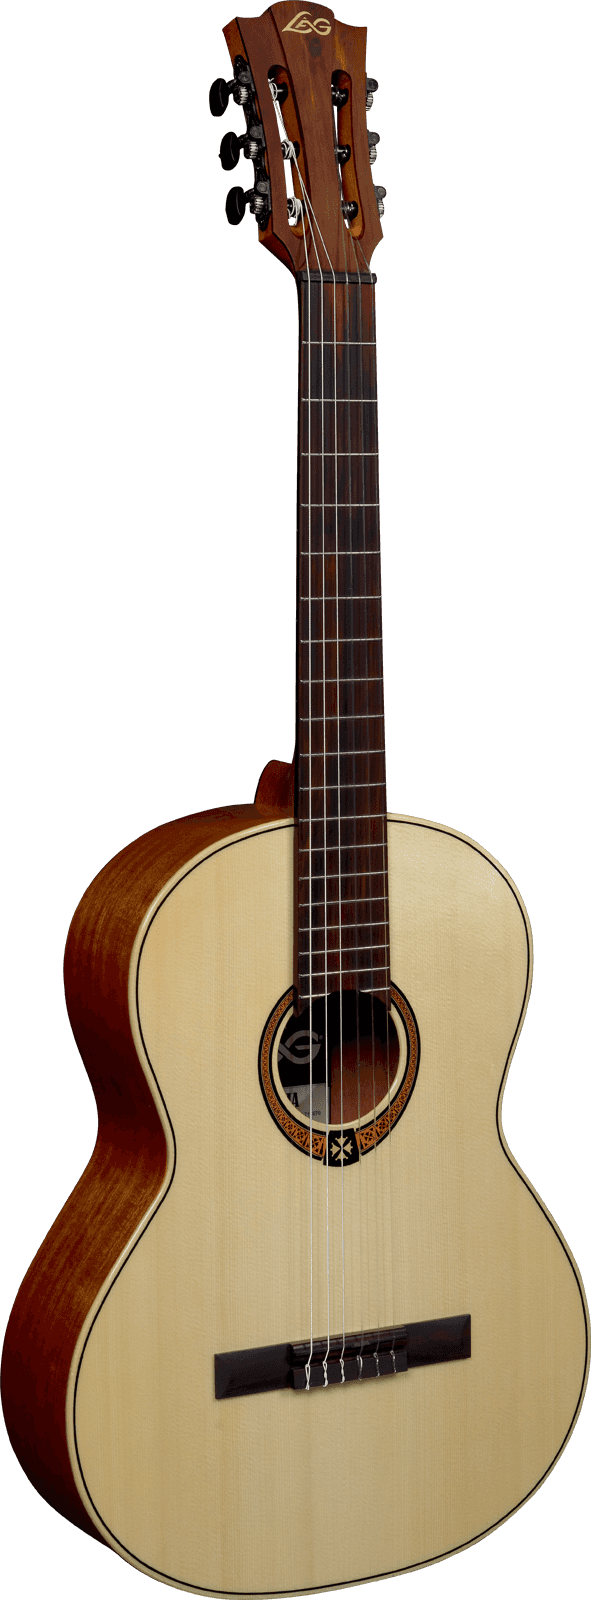 LAG OCCITANIA 88 OC88 CLASSICAL SPRUCE, Nylon Strung Guitar for sale at Richards Guitars.